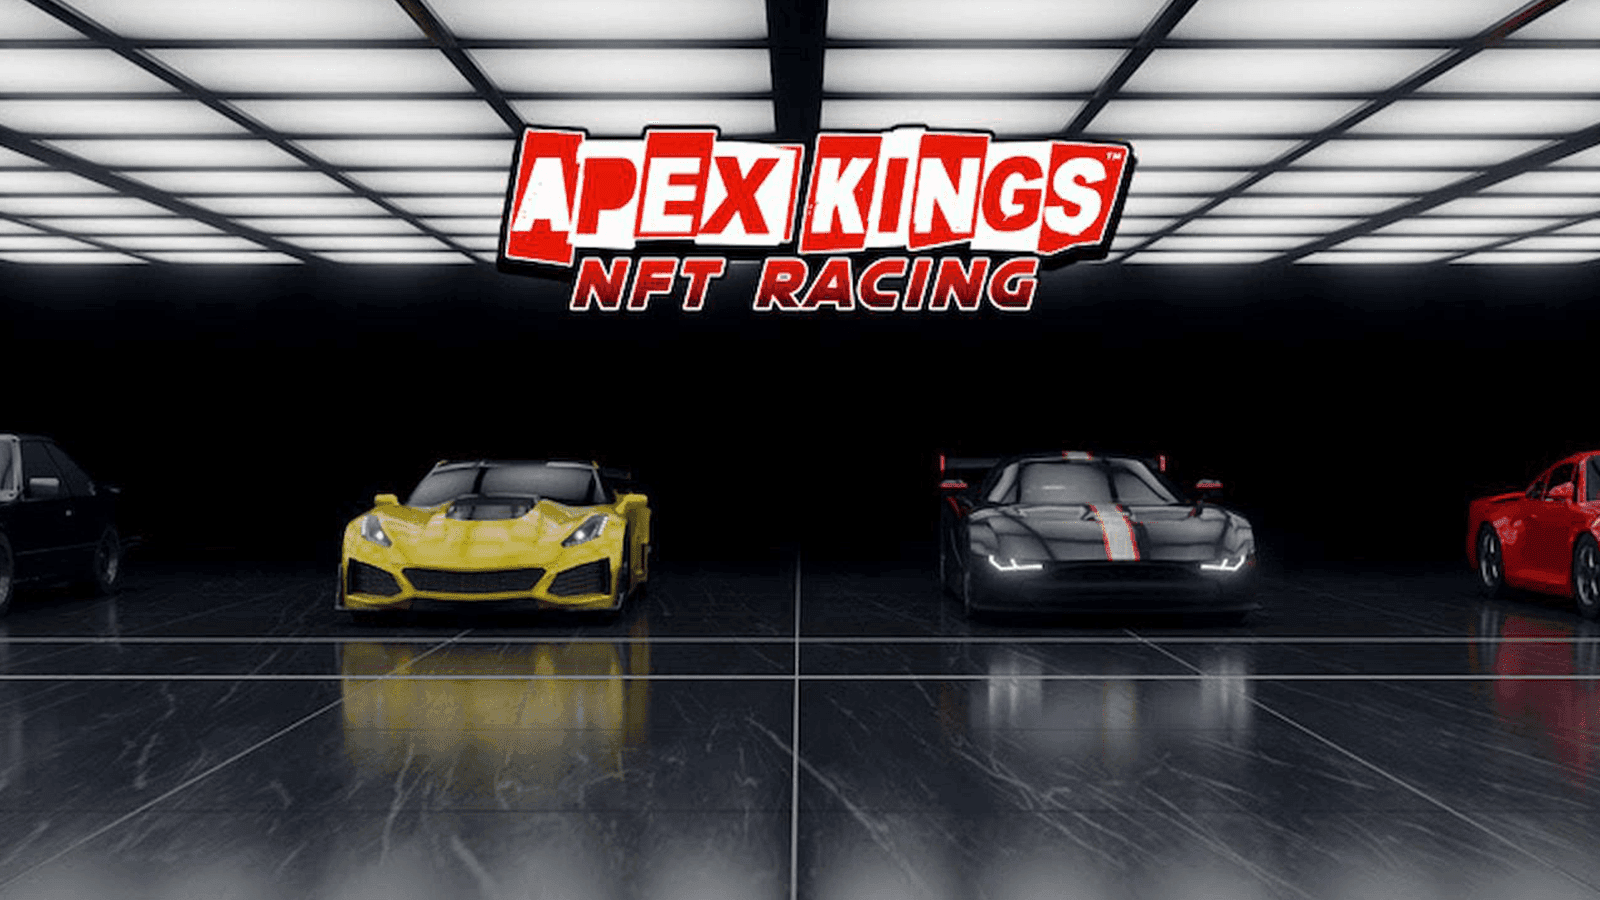 Apex Kings NFT Racing - Revue du jeu